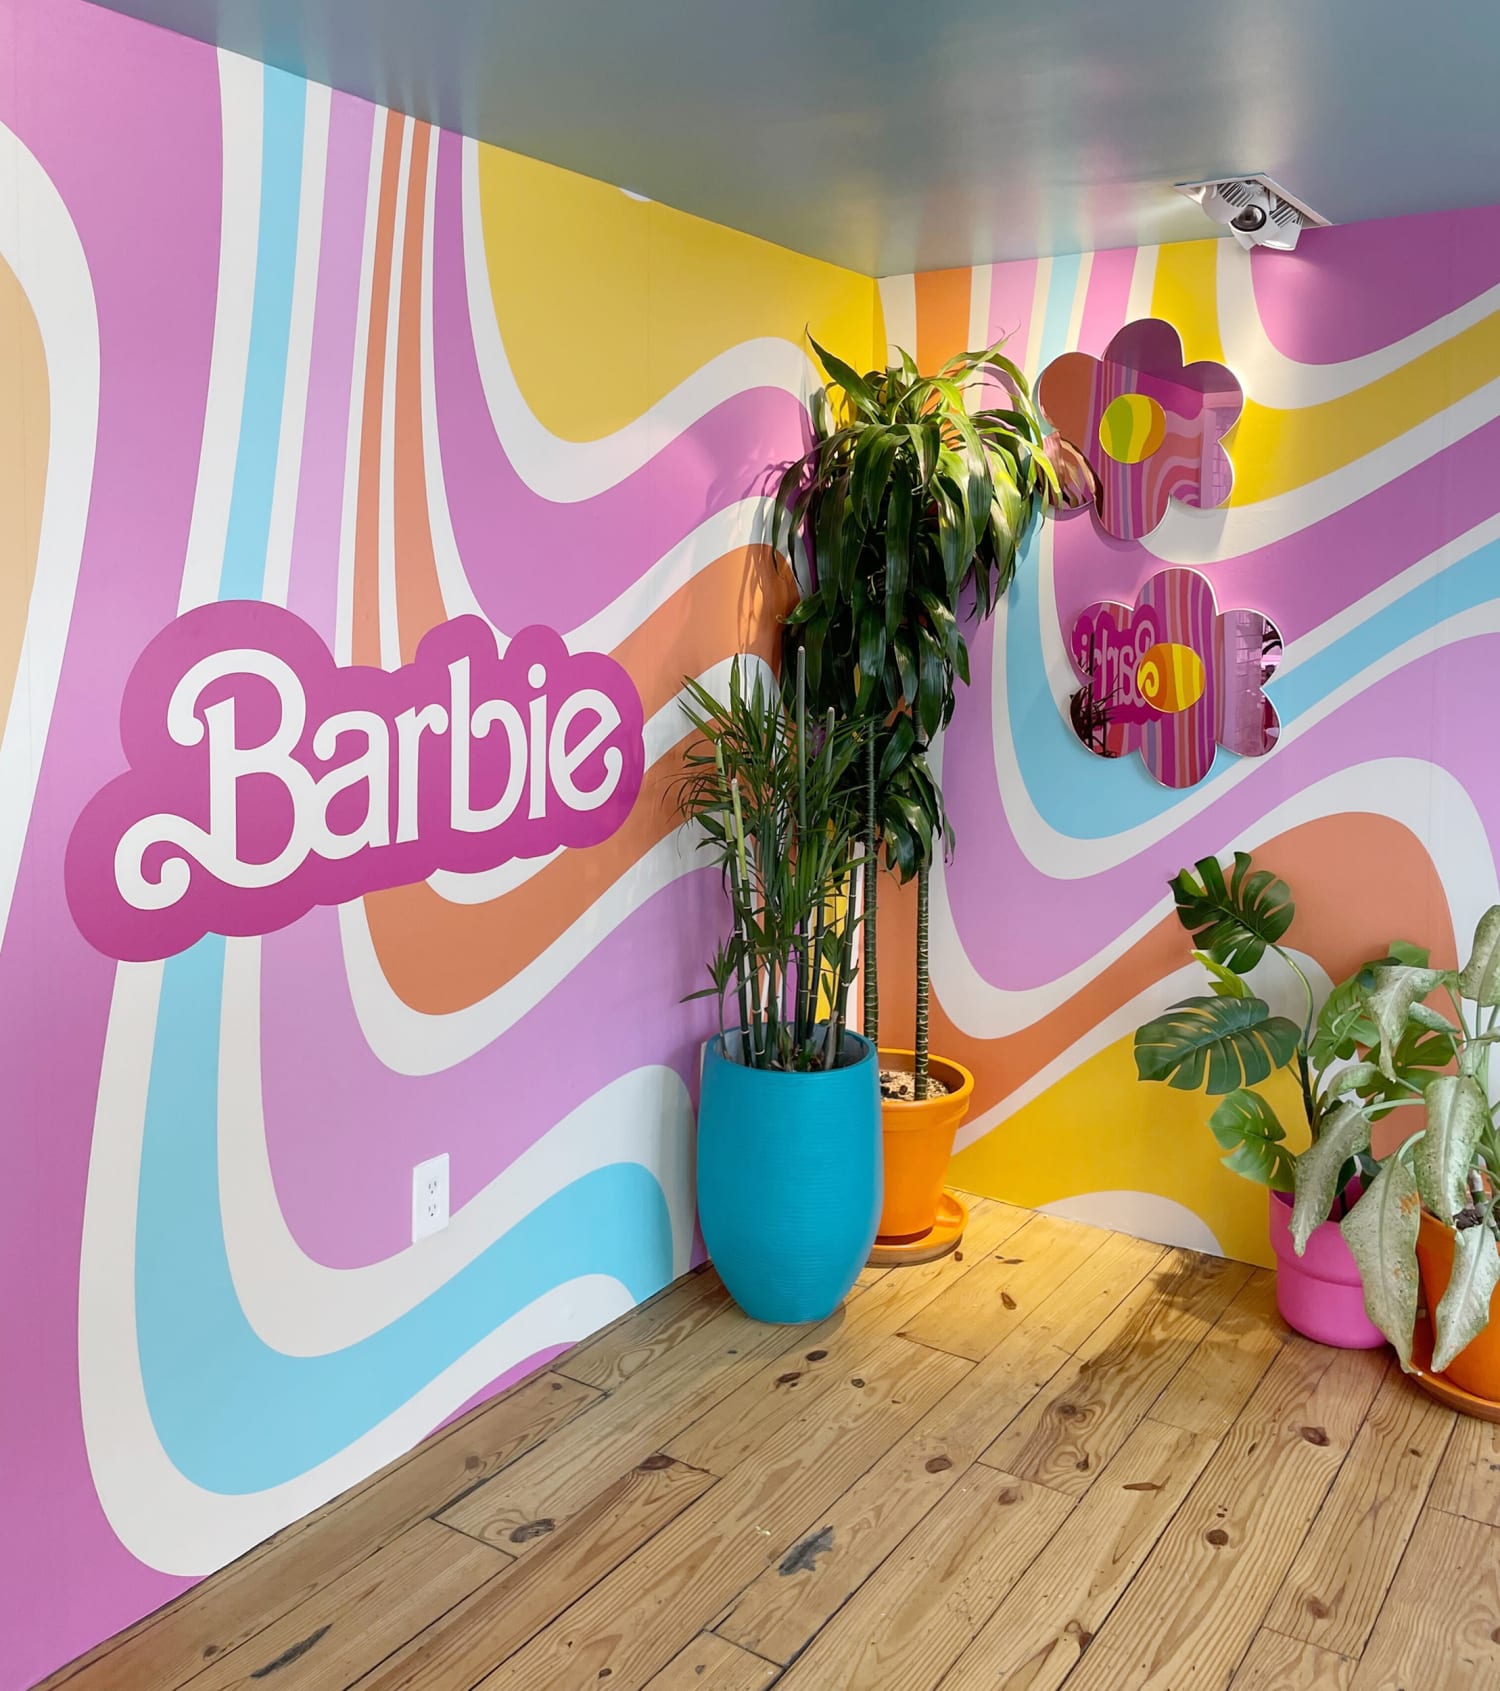 Malibu Barbie Café brings groovy beachside energy to major cities - L.A.  Business First